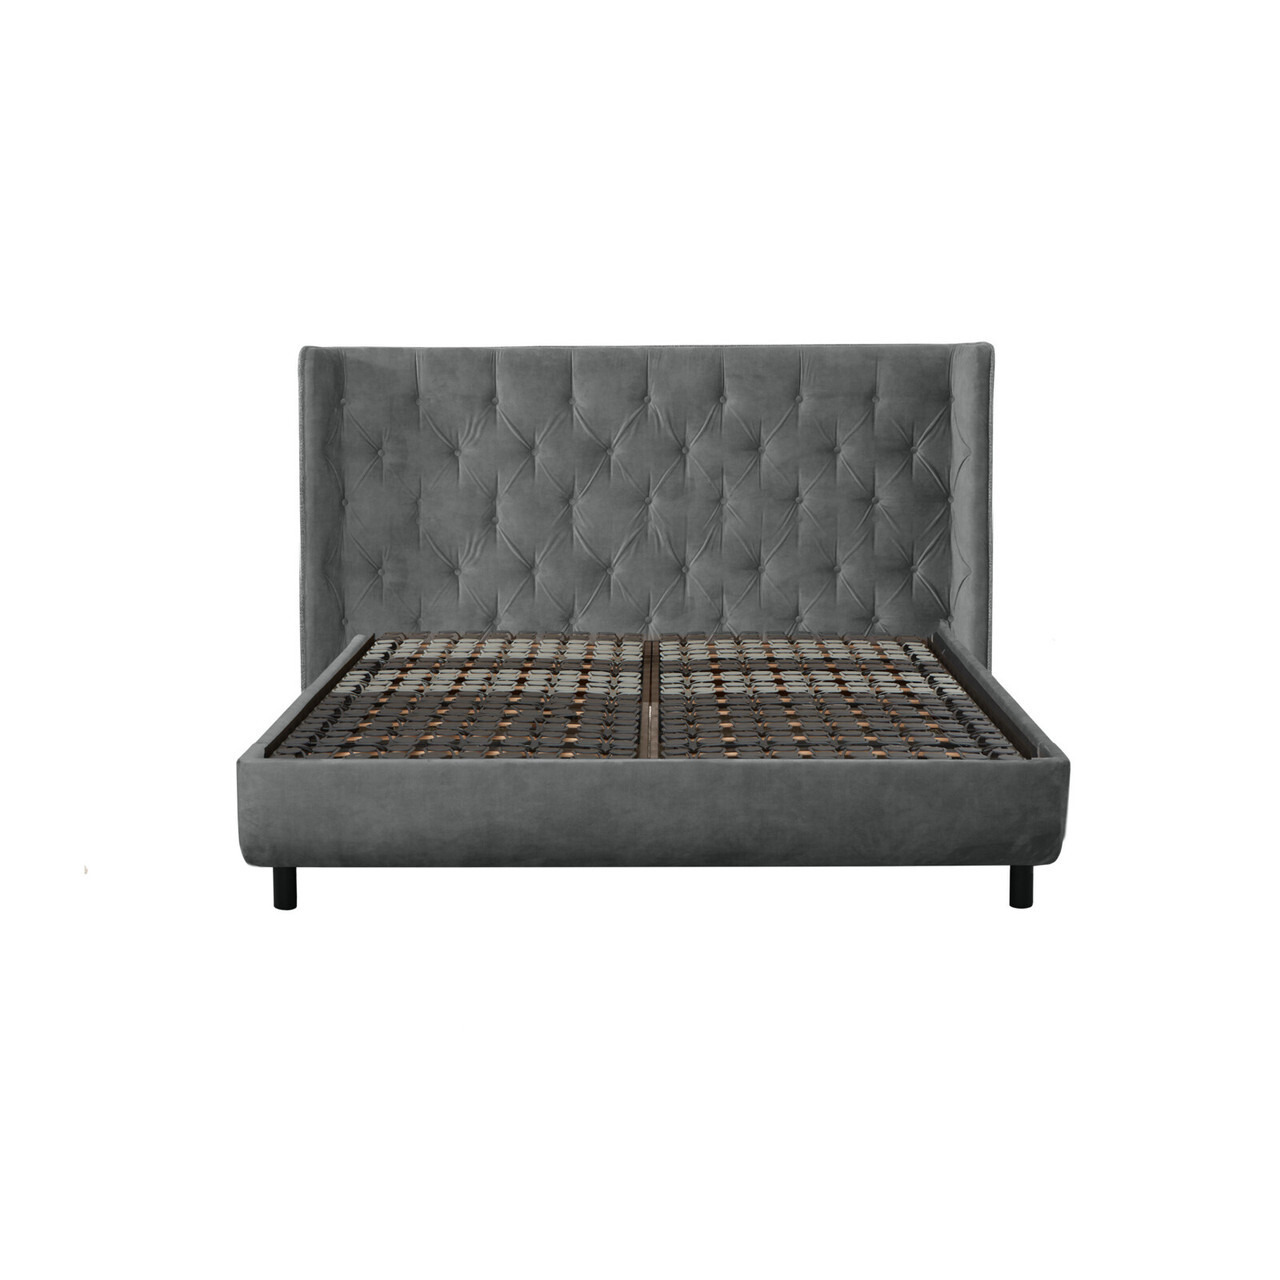 Tempur Arc™ Luxury Upholstered Bed Frame - image 1